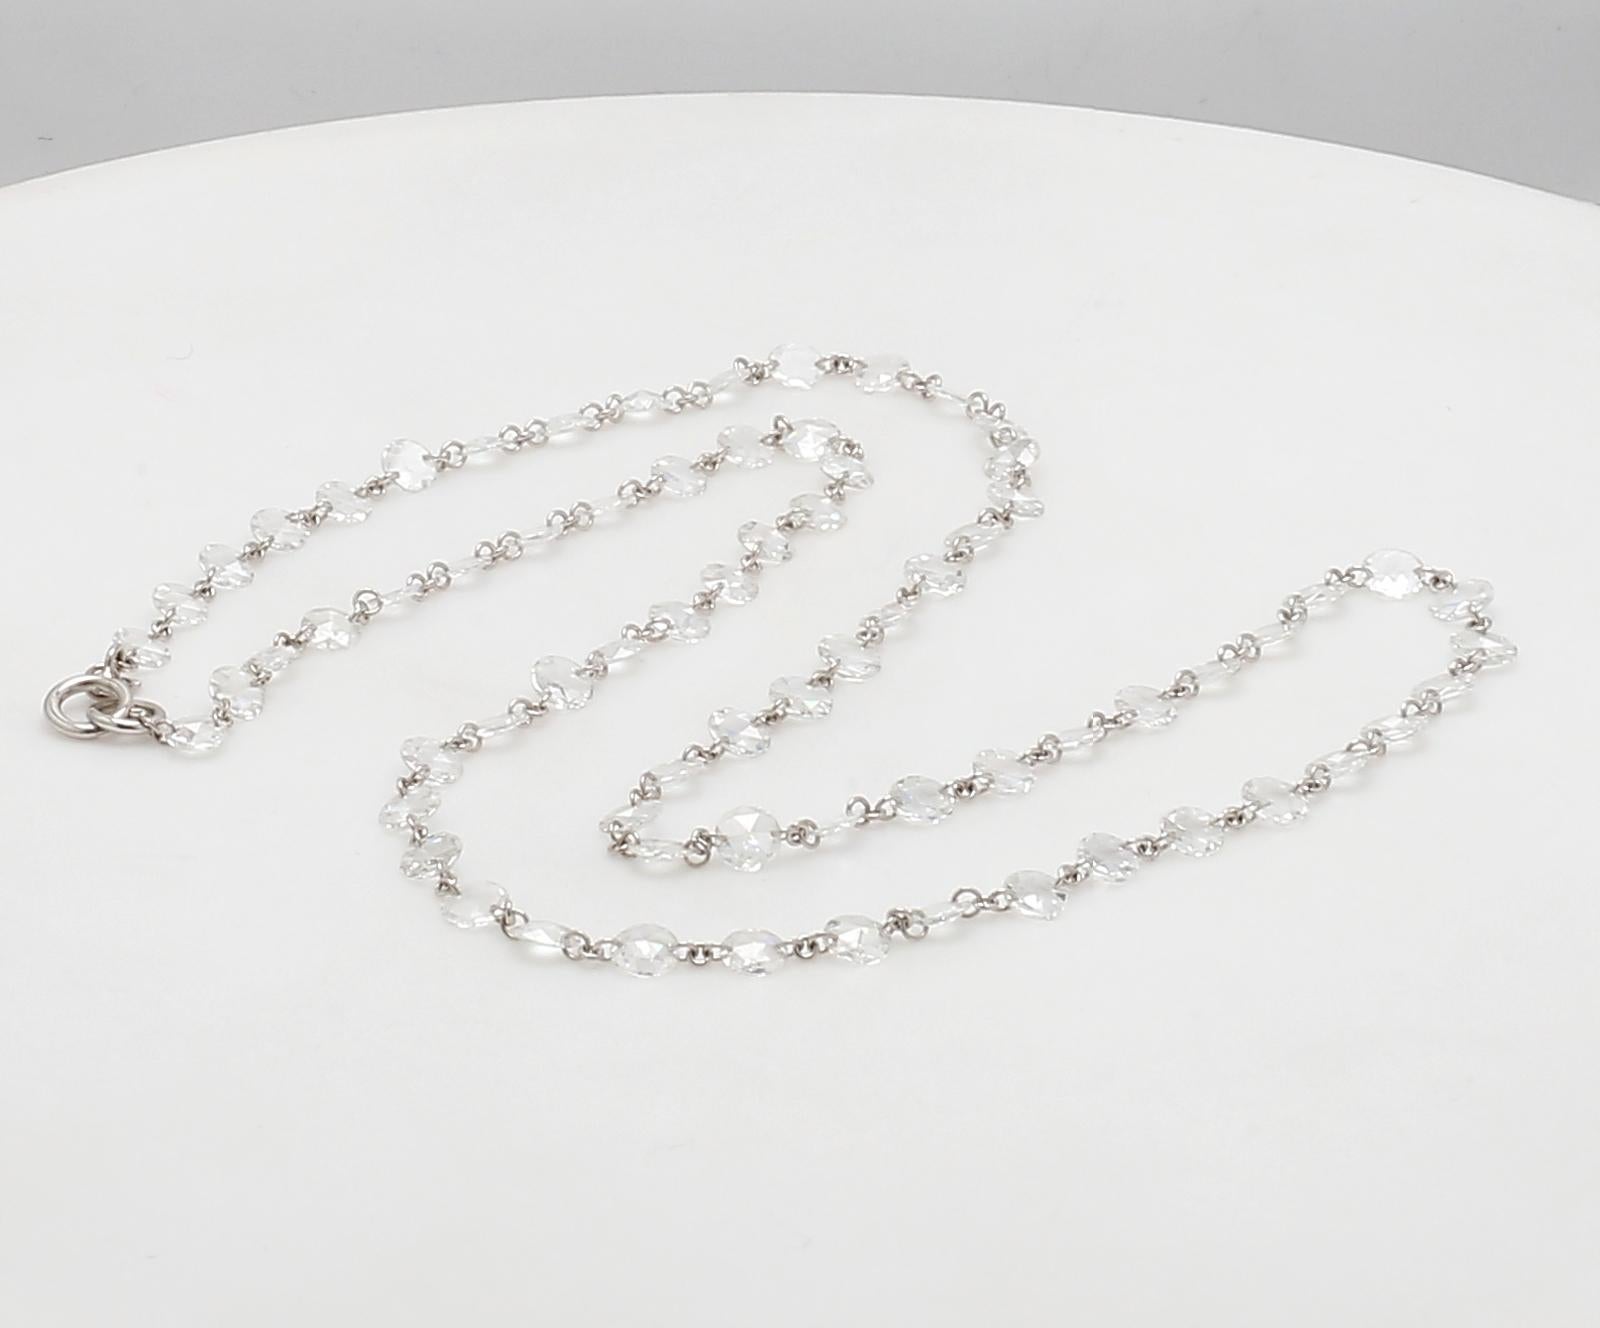 PANIM Diamond Rosecut 18k White Gold Choker Necklace

A gorgeous diamond necklace is a staple in everyone's wardrobe .This Panim Classic Diamond Rosecut Necklace features round shape diamond rosecut .These diamonds sparkle incredibly ,set in 18k